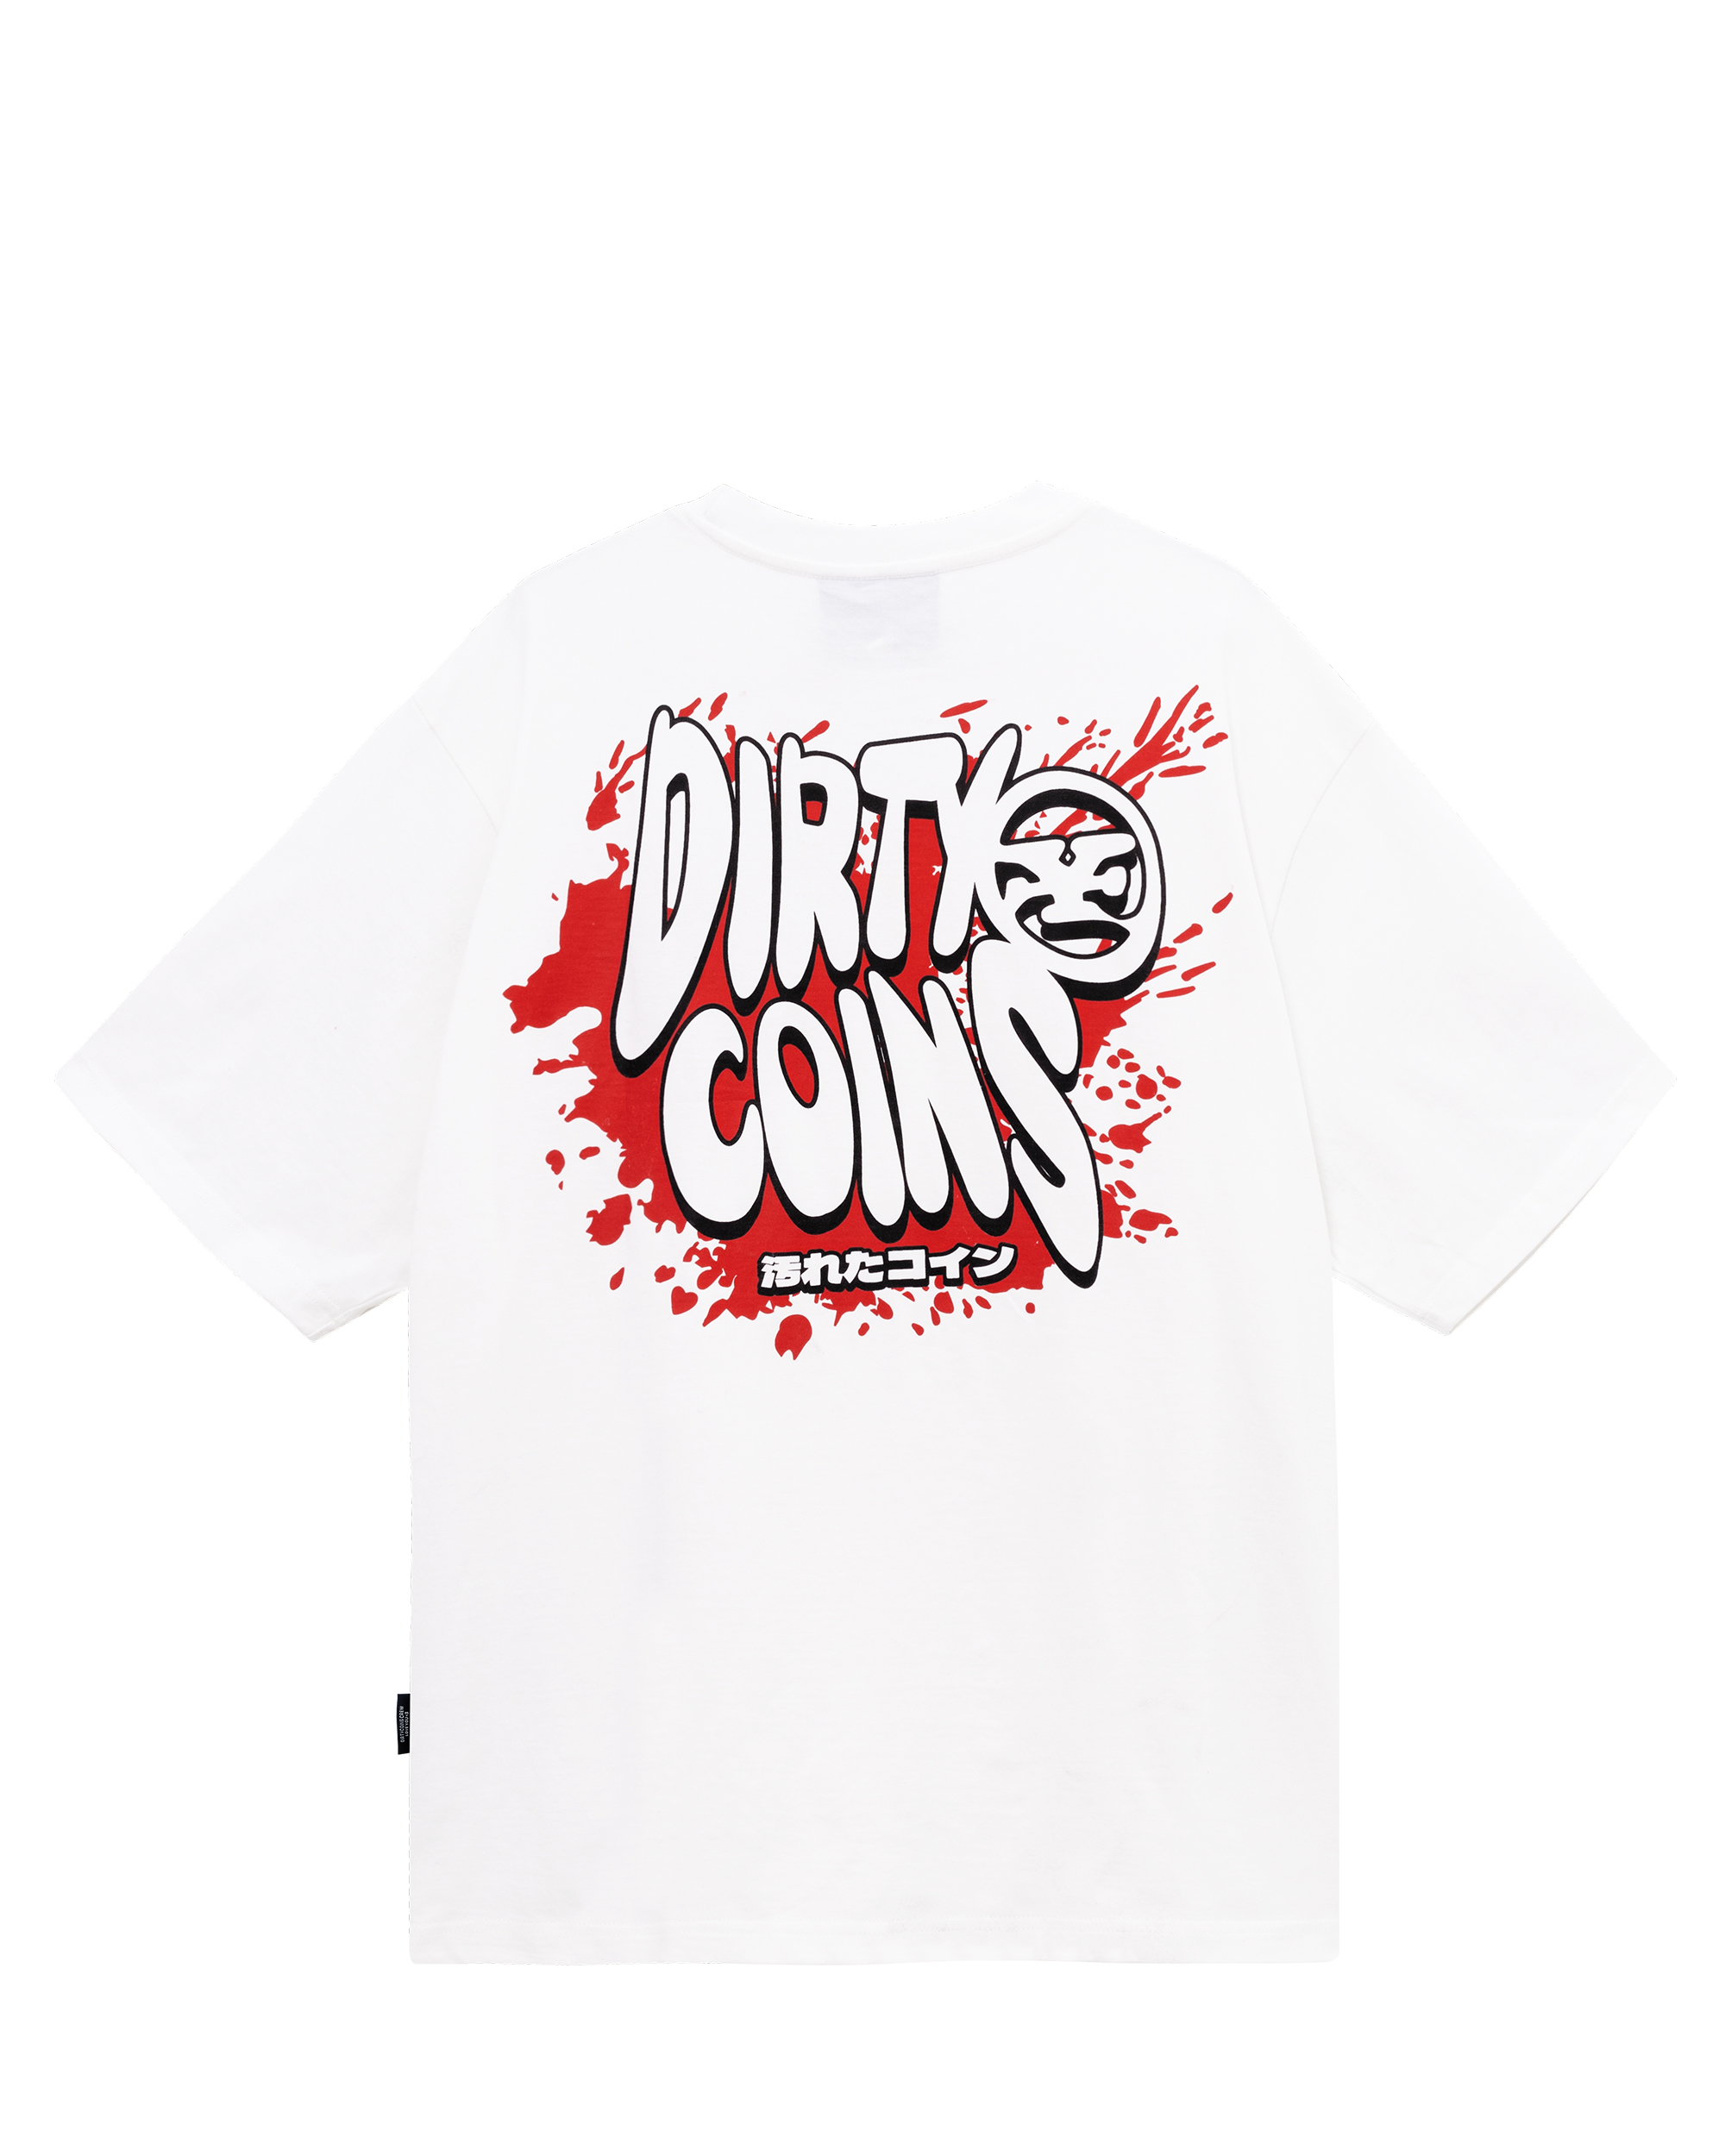 DirtyCoins Splash Paint T-shirt - White